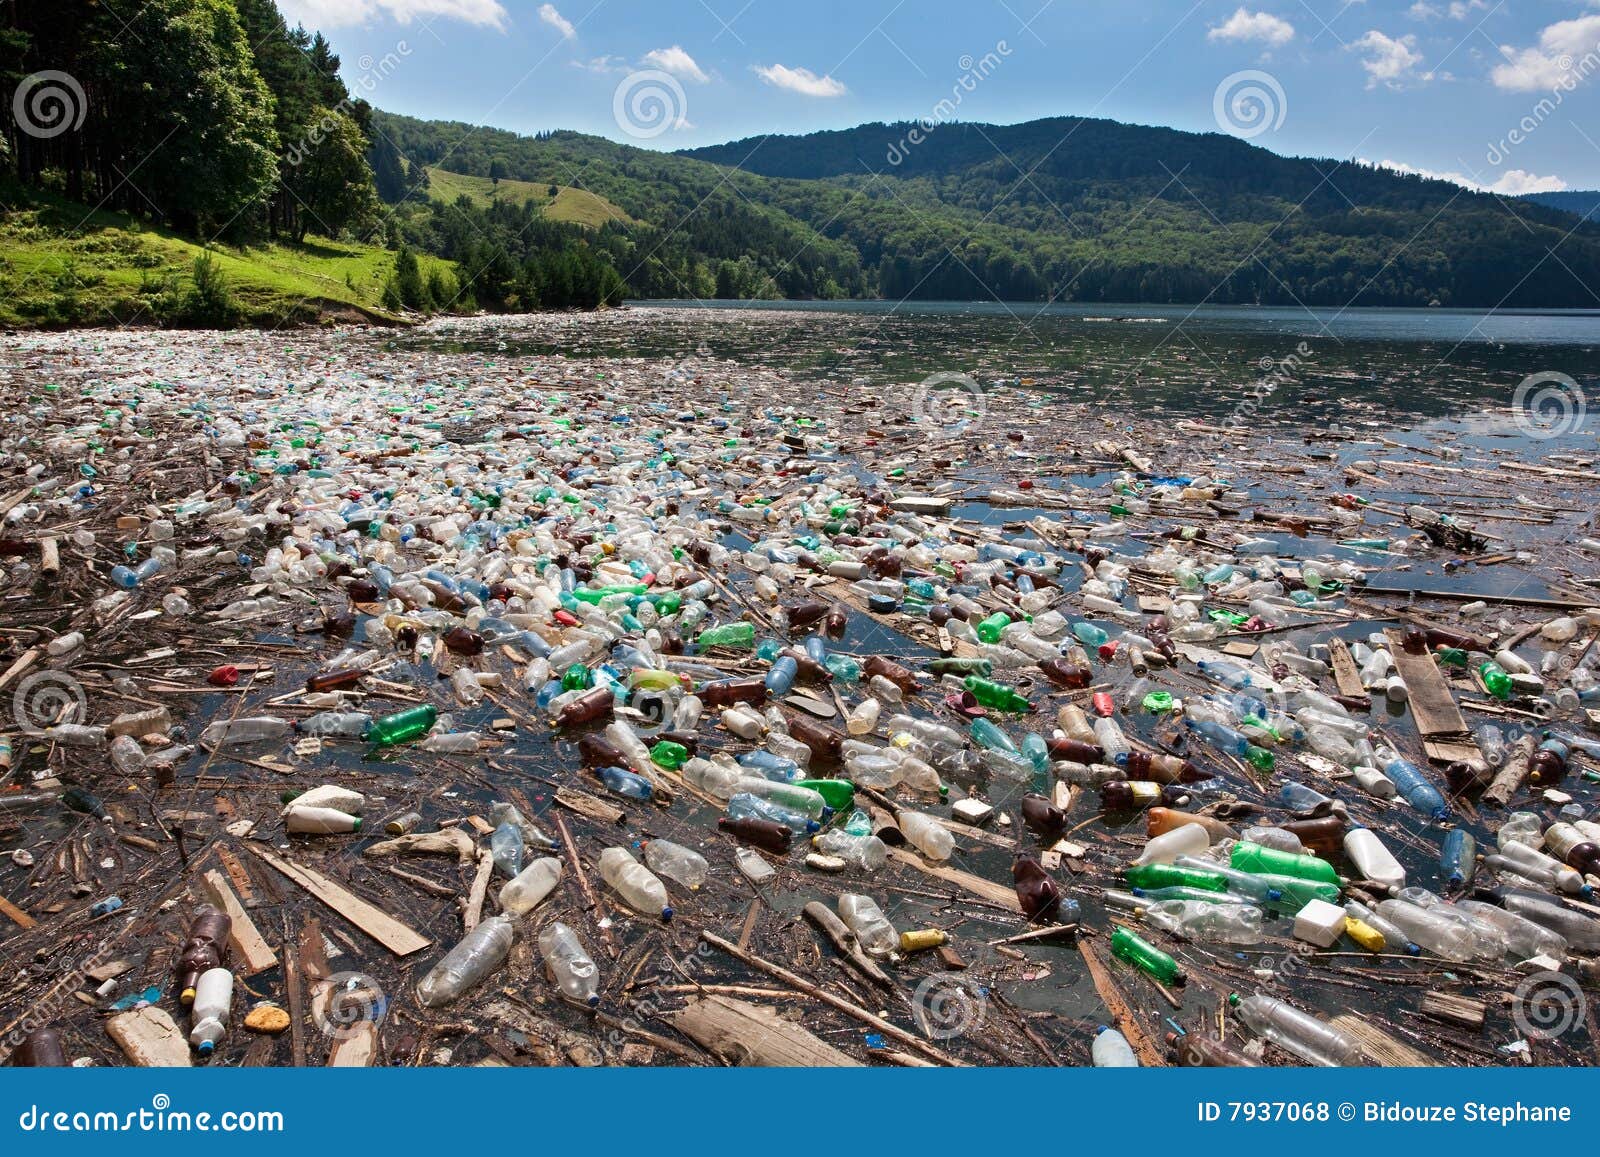 big plastic pollution